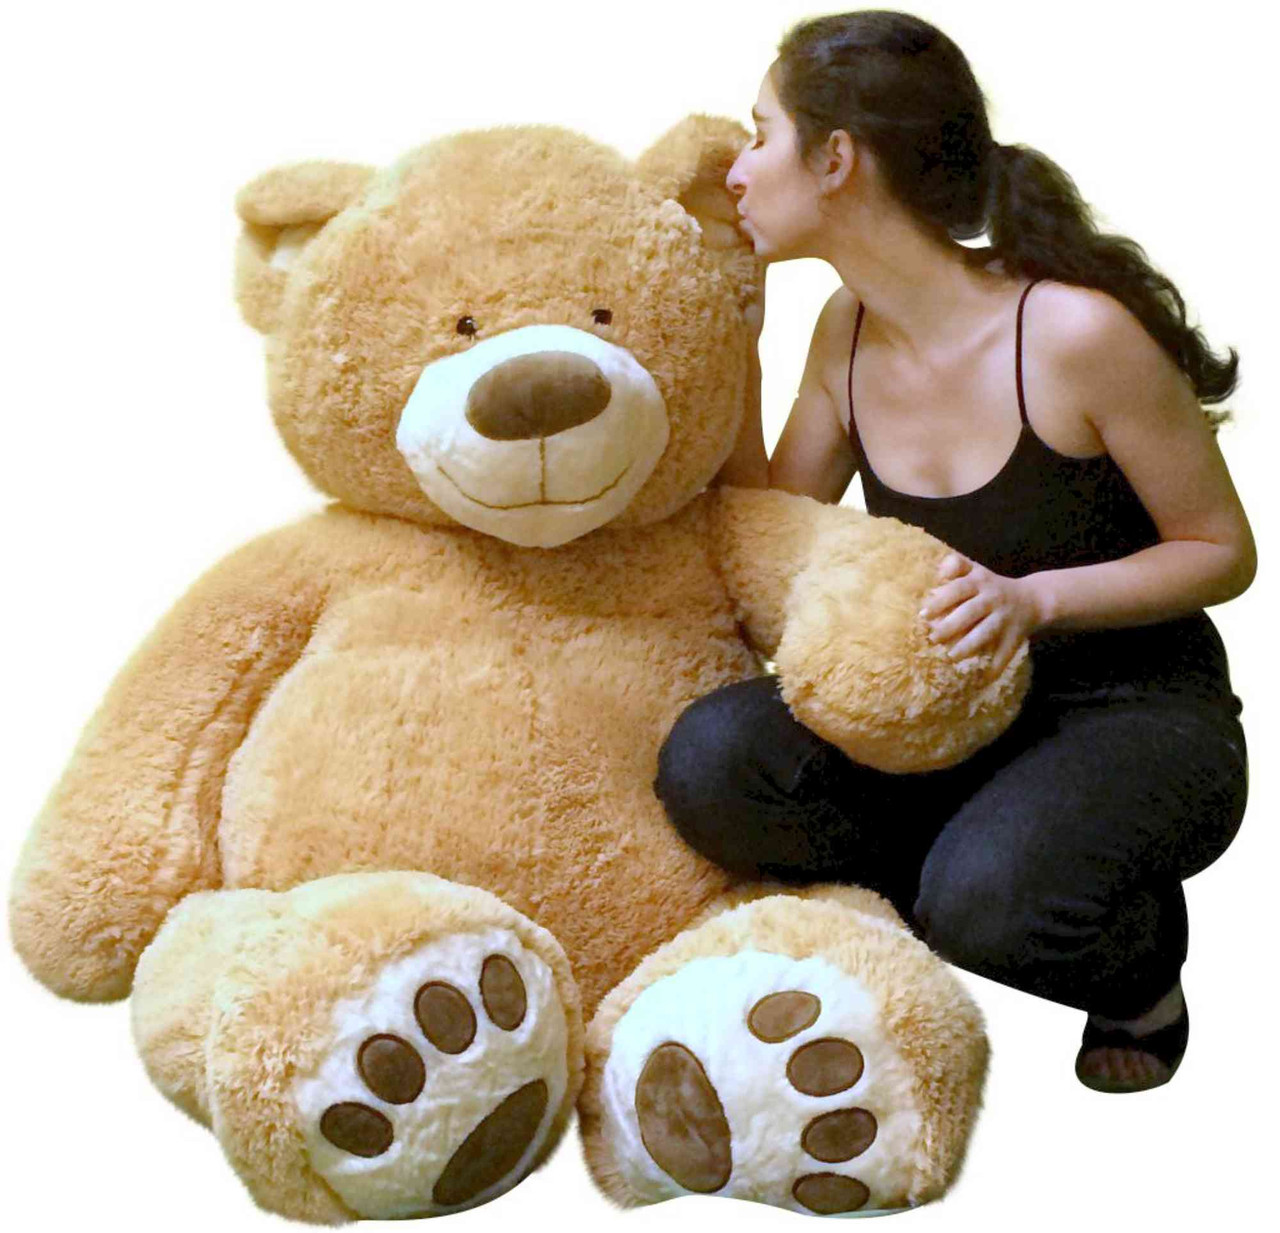 Big Plush big plush giant teddy bear with happy birthday t-shirt - huge plush  teddybear - stuffed animal - caring gift - oso de peluche